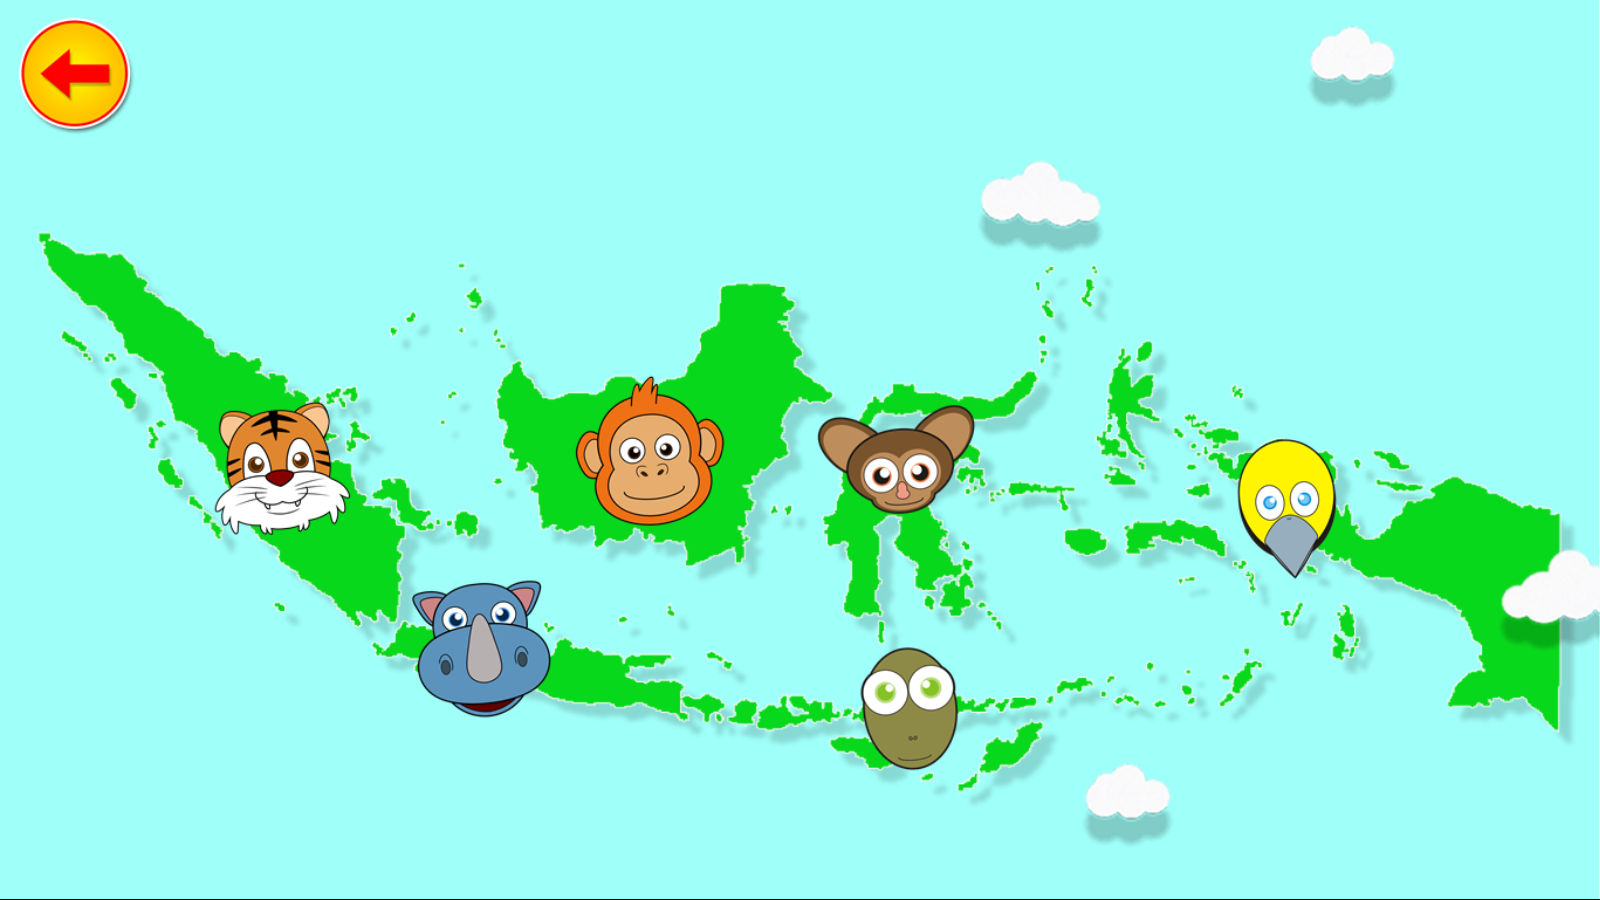 Indonesian Animals Puzzle Ayo Kenali Satwa Langka Indonesia Ariefrahmansyah